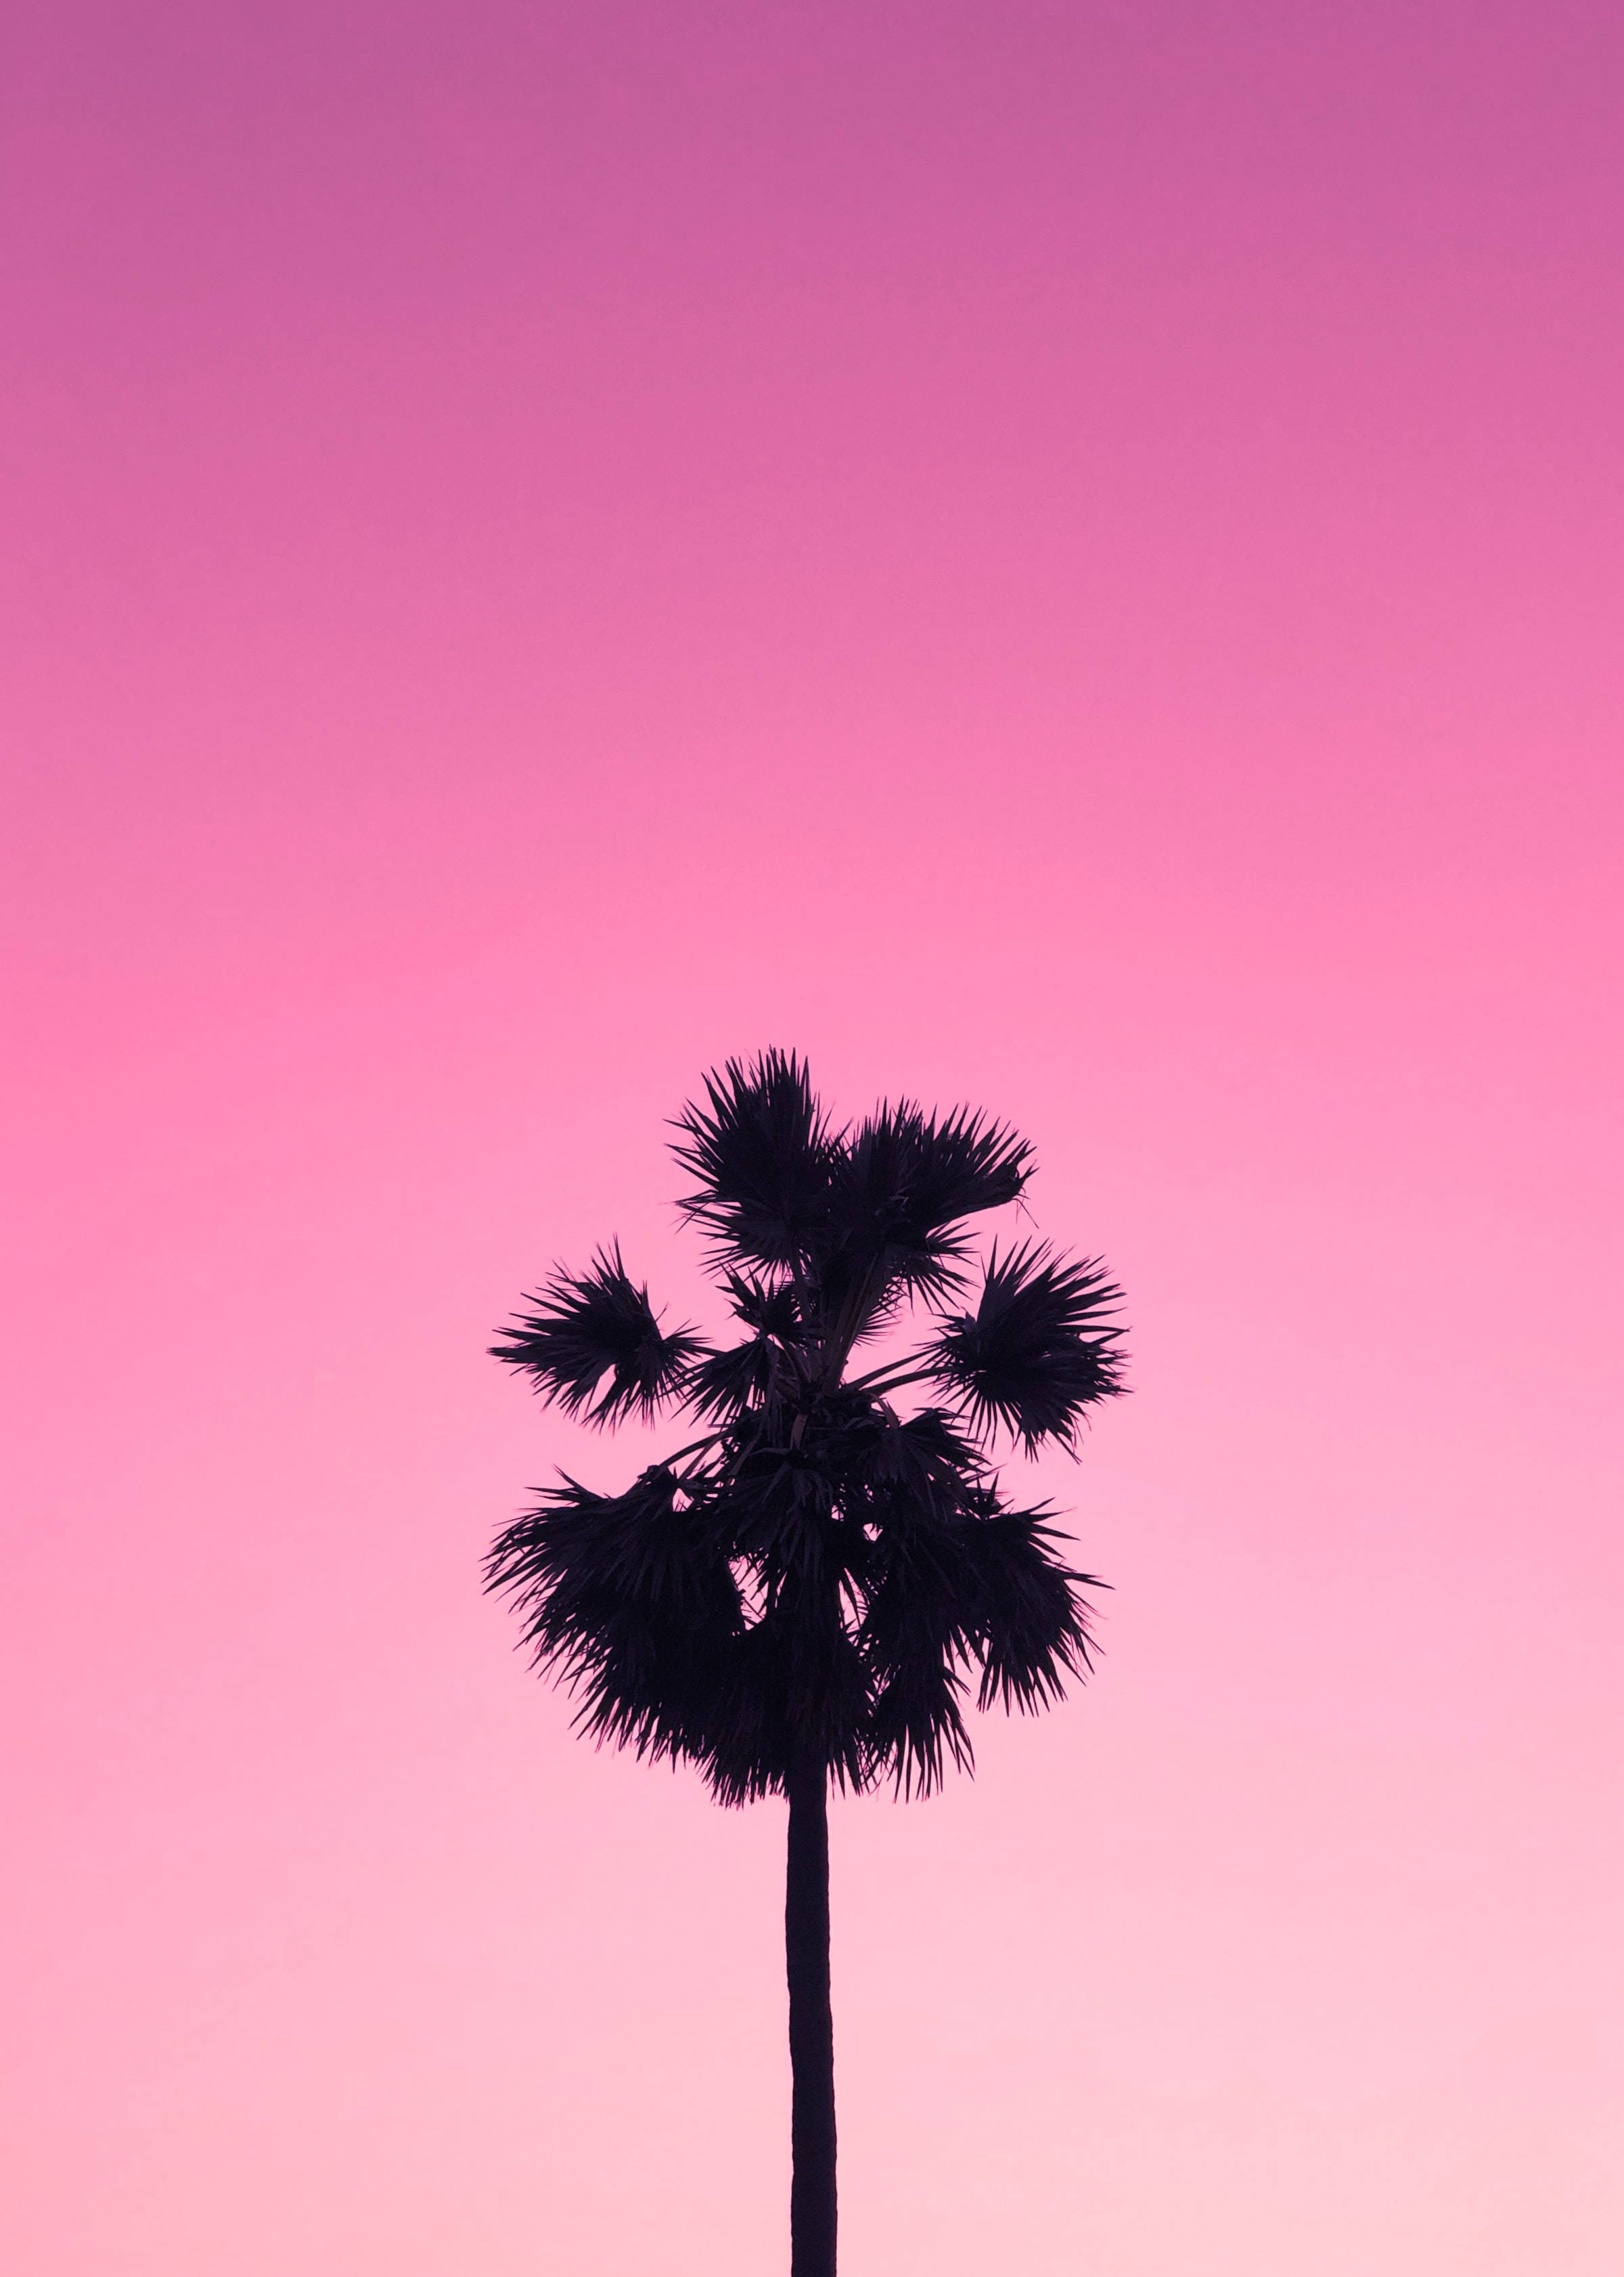 Cute Pink Aesthetic Sky Tree Silhouette Wallpaper